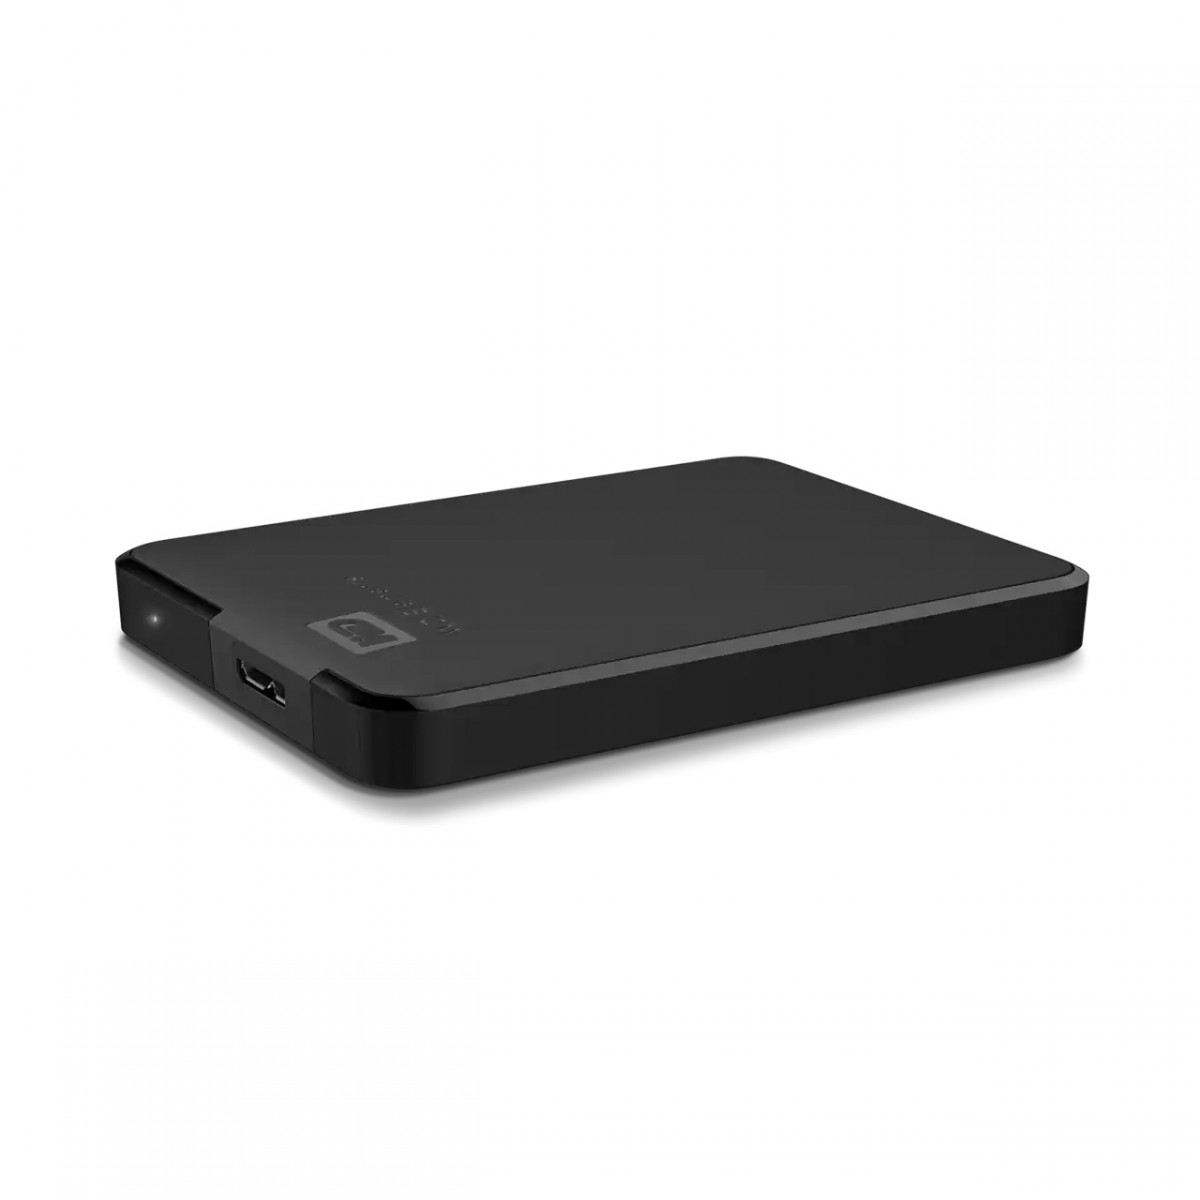 HD Externo WD Elements Portable 1TB, USB 3.0, Black, WDBUZG0010BBK